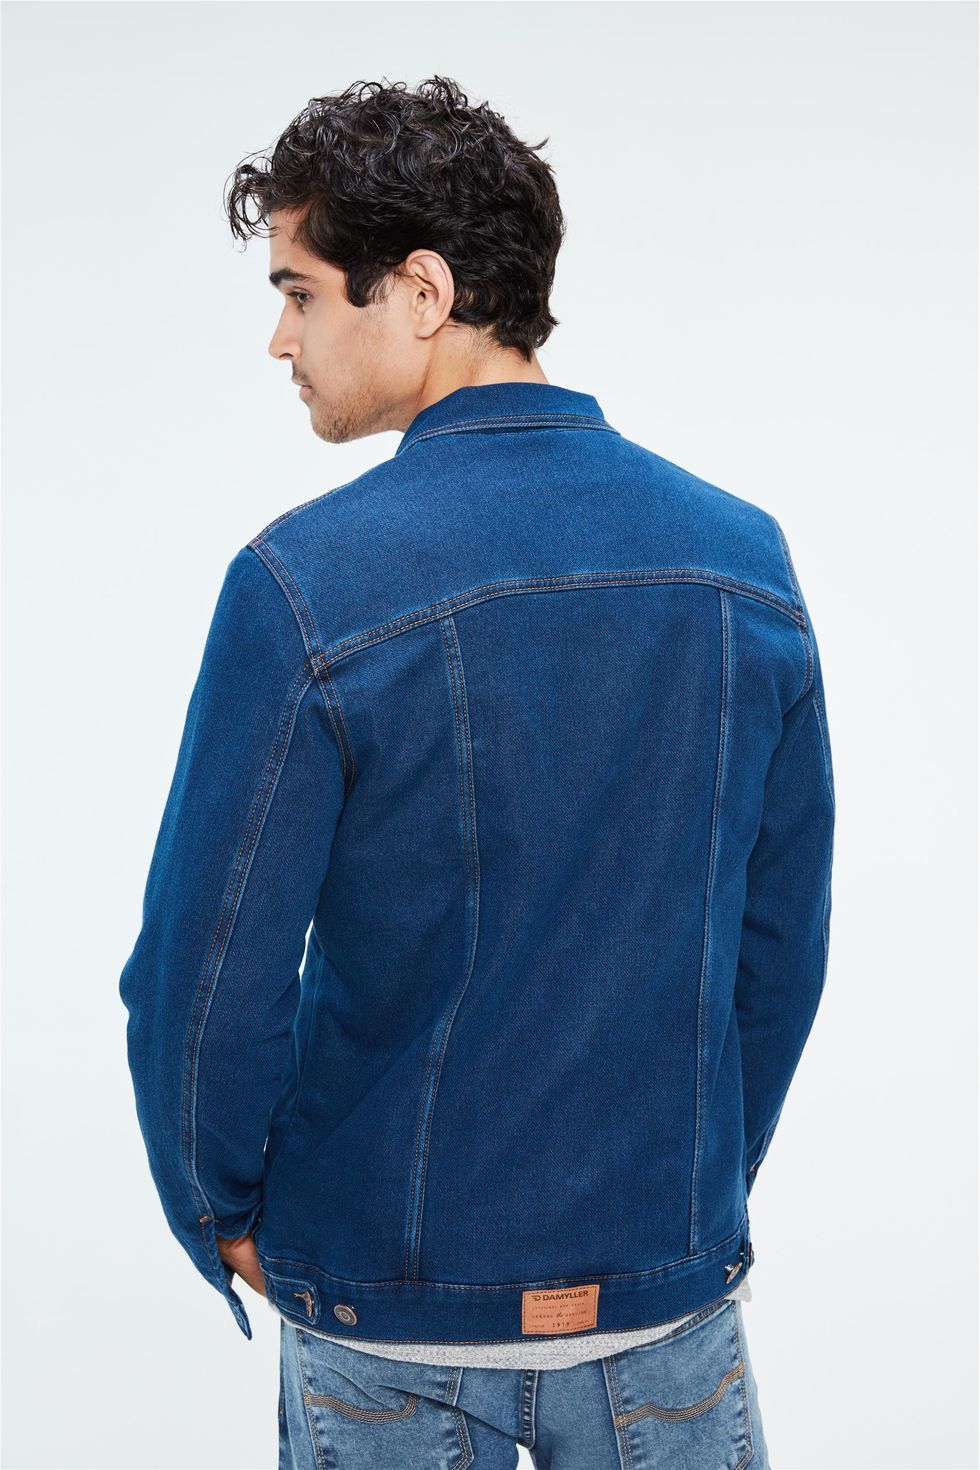 jaqueta masculina jeans com pelo